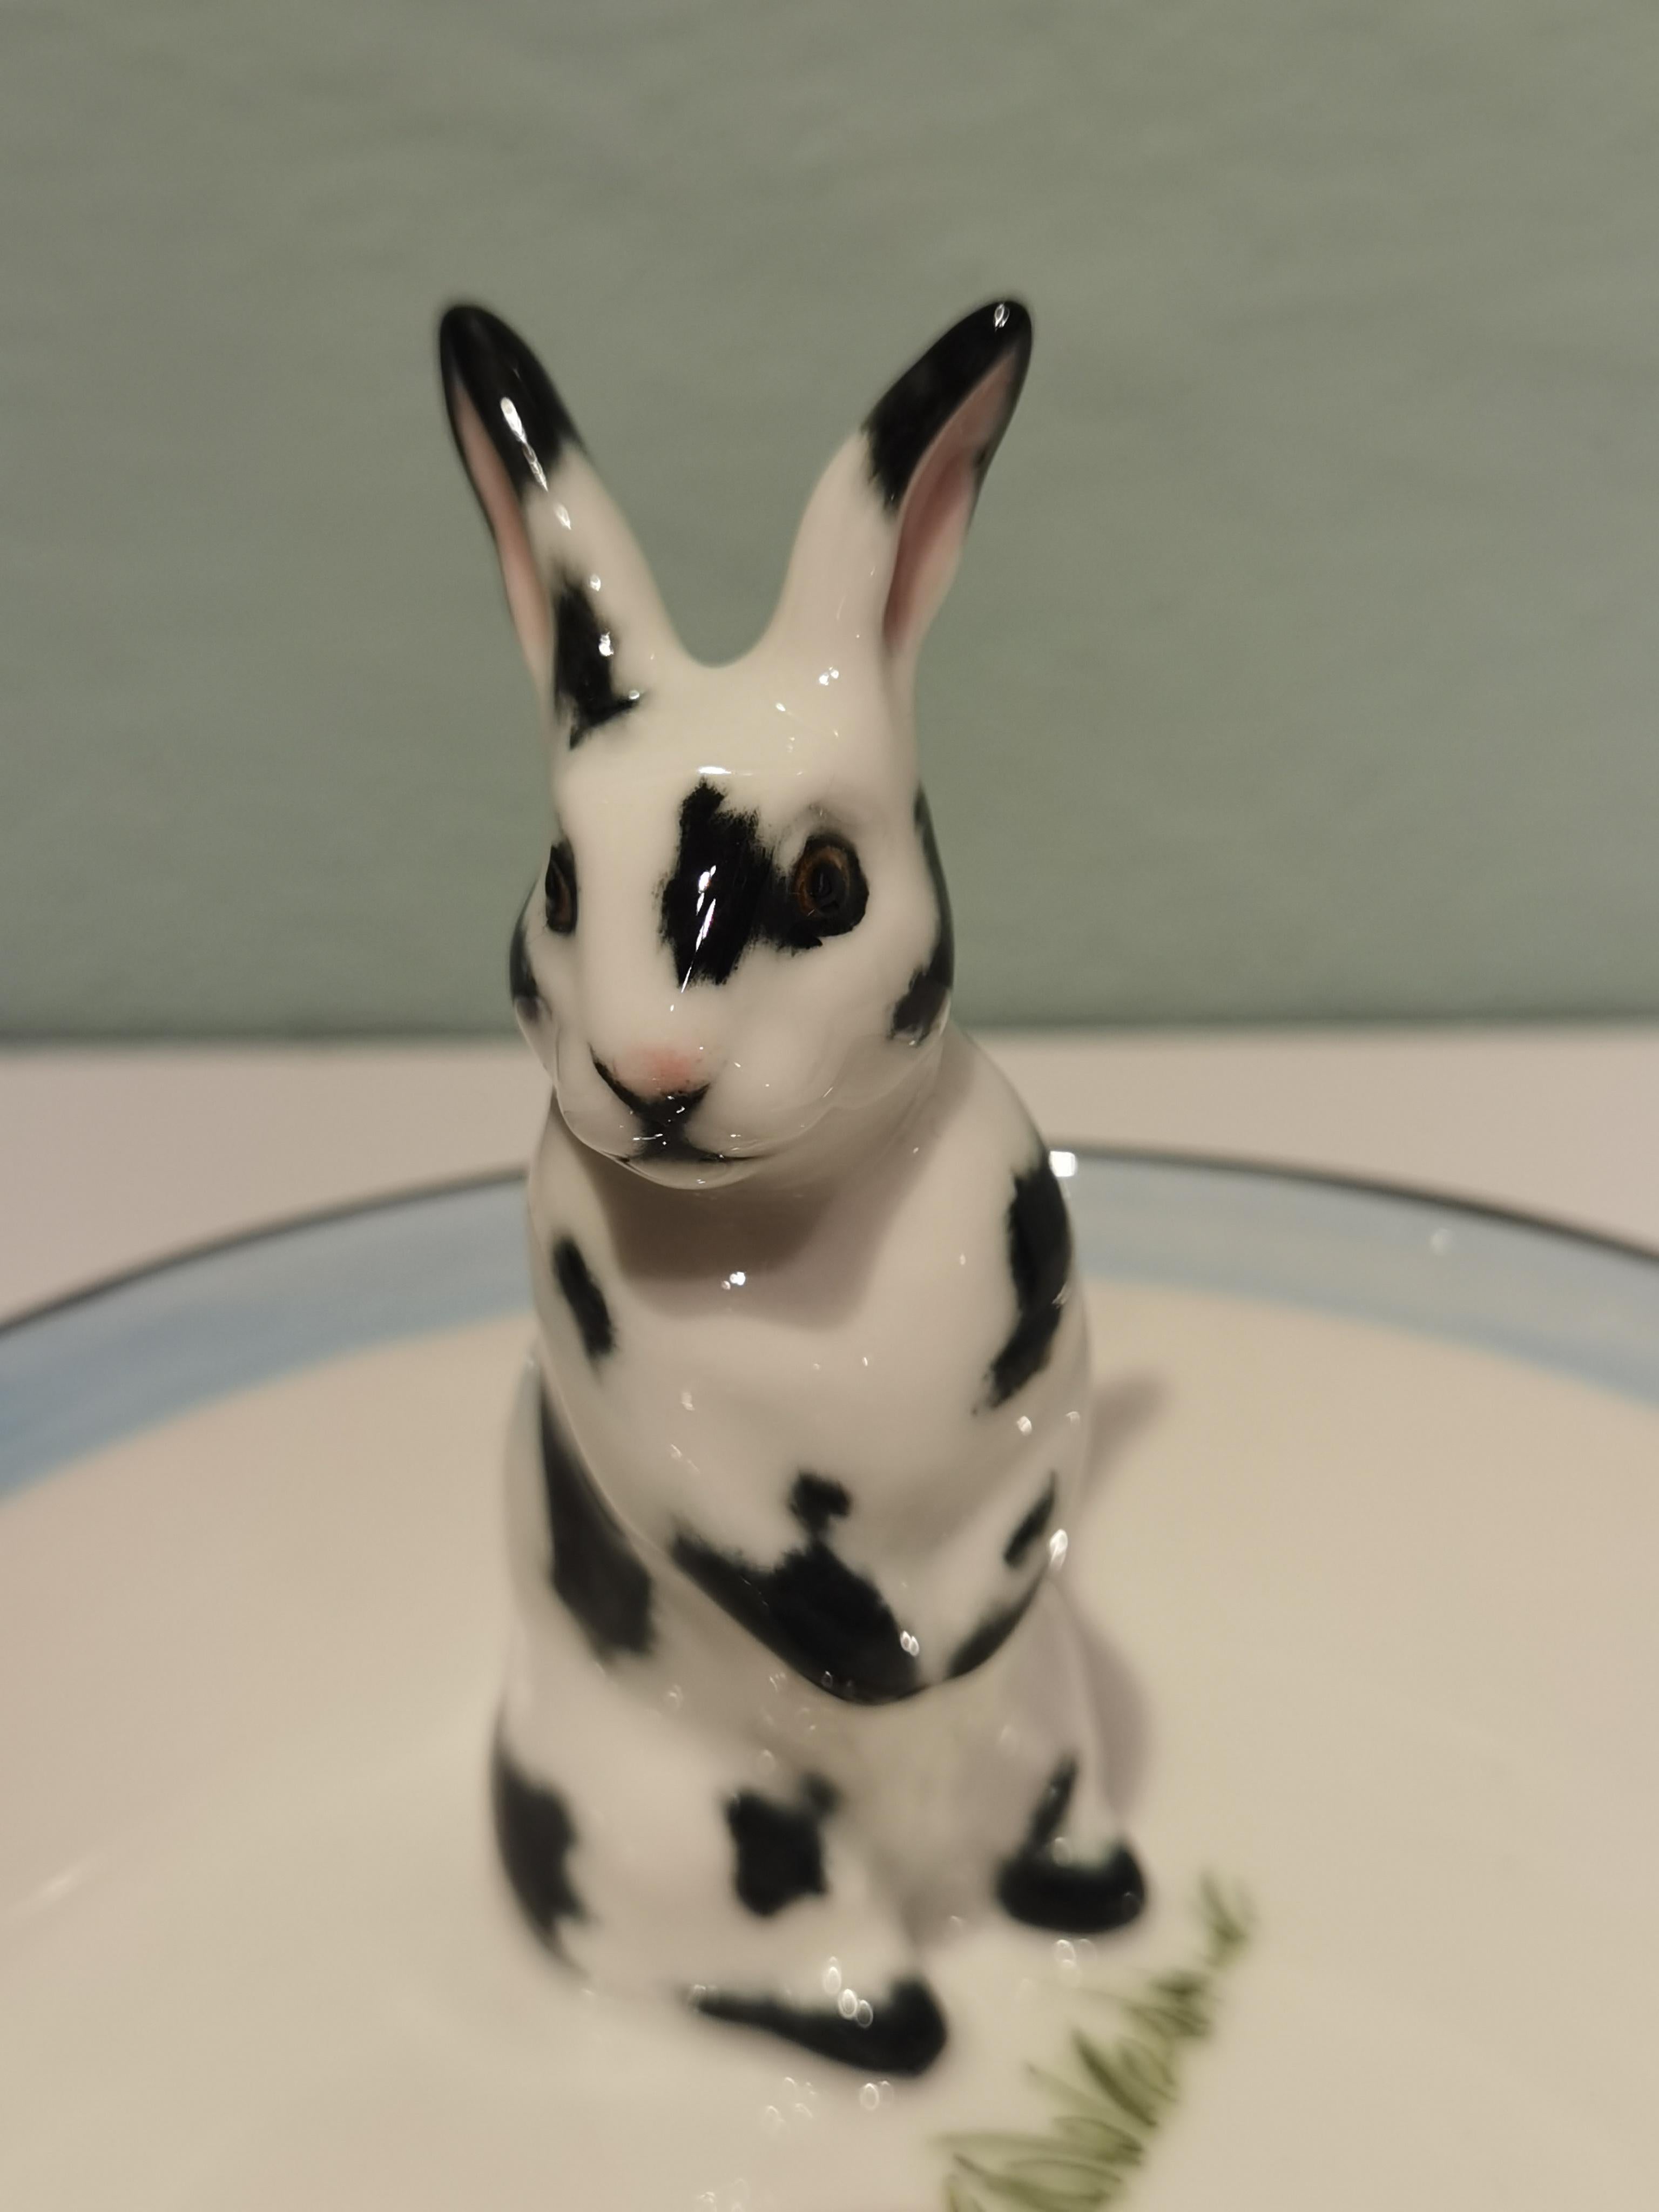 Country Porcelain Bowl Hand Painted Easter Rabbit Figure Sofina Boutique Kitzbuehel For Sale